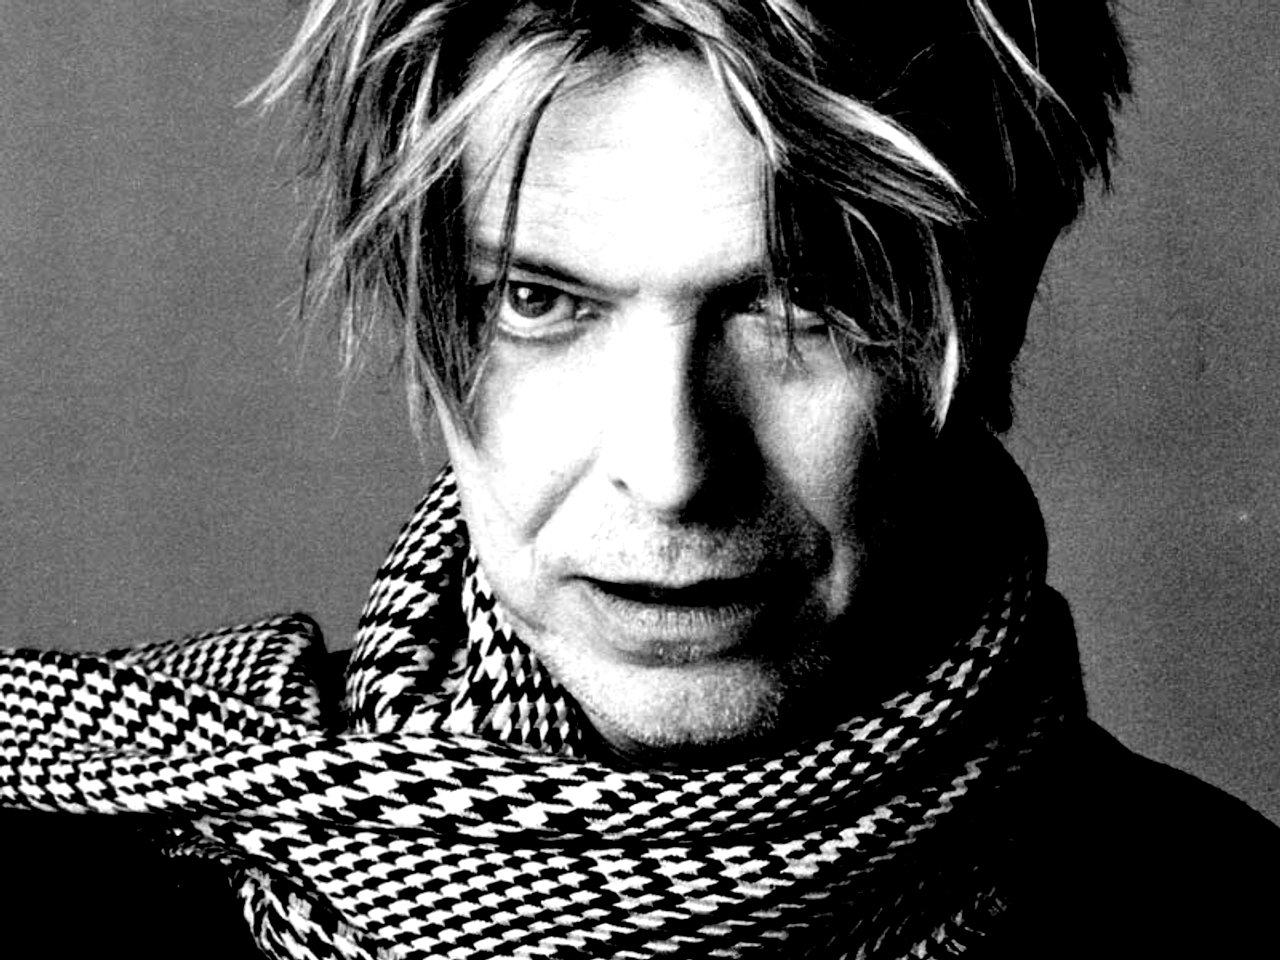 David Bowie Dies at Age 69 After Battling Cancer